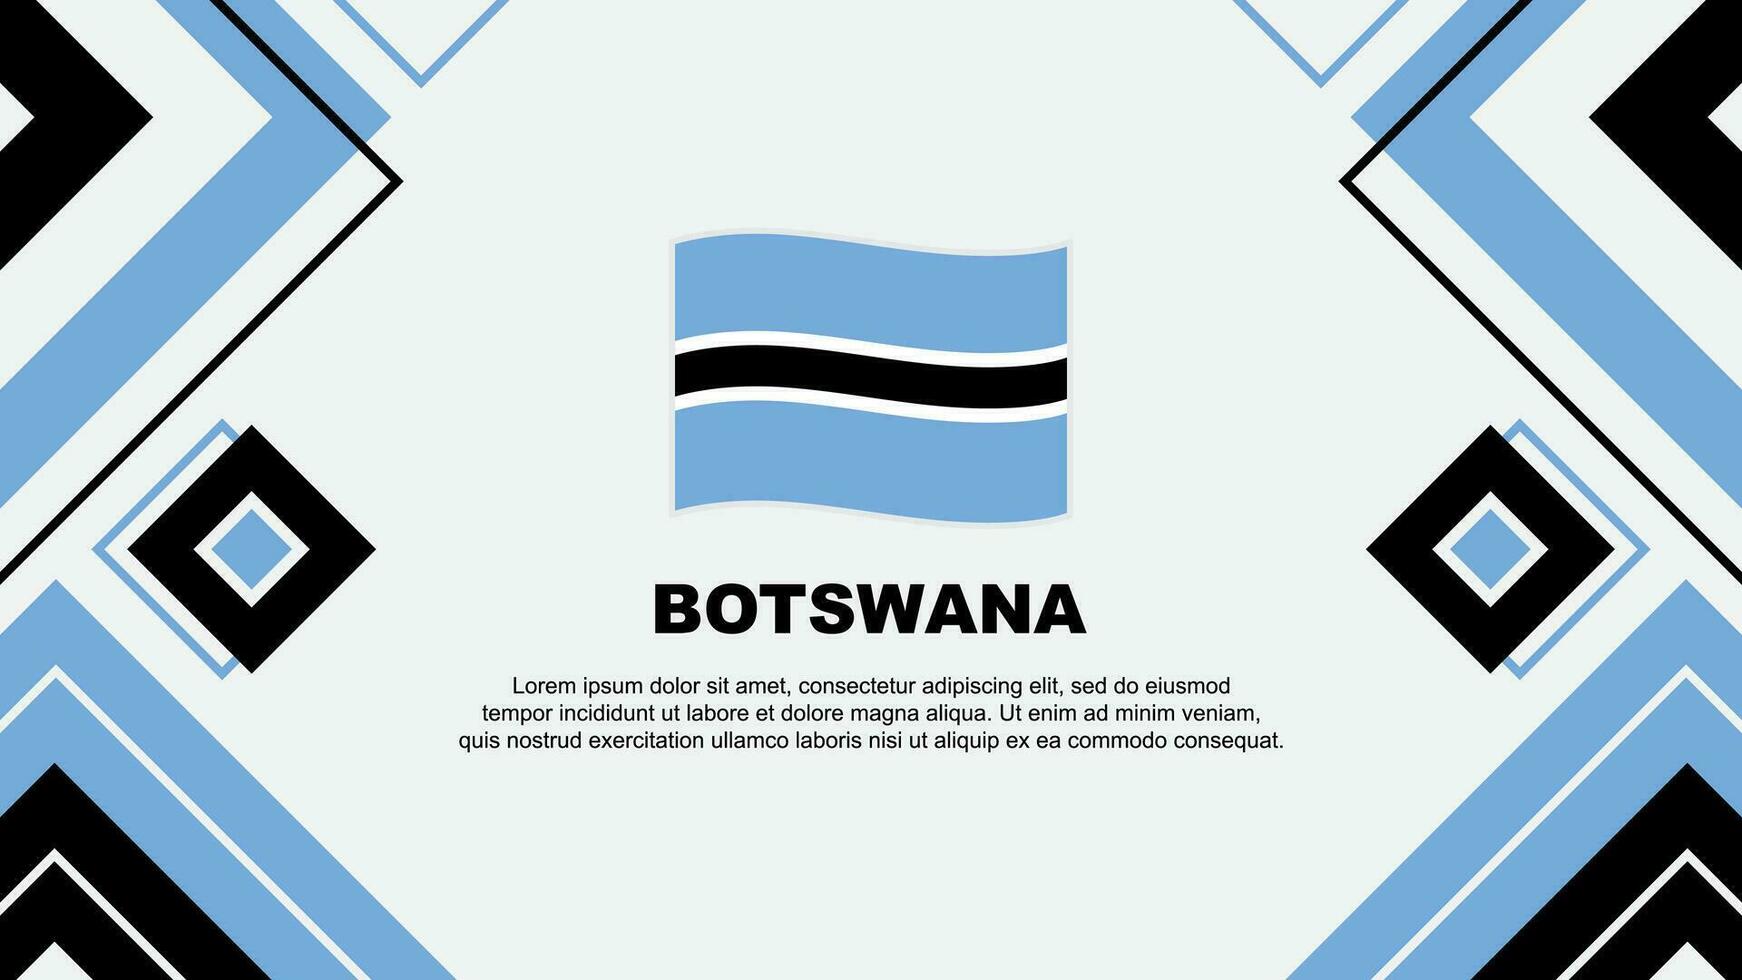 Botswana Flag Abstract Background Design Template. Botswana Independence Day Banner Wallpaper Vector Illustration. Botswana Background